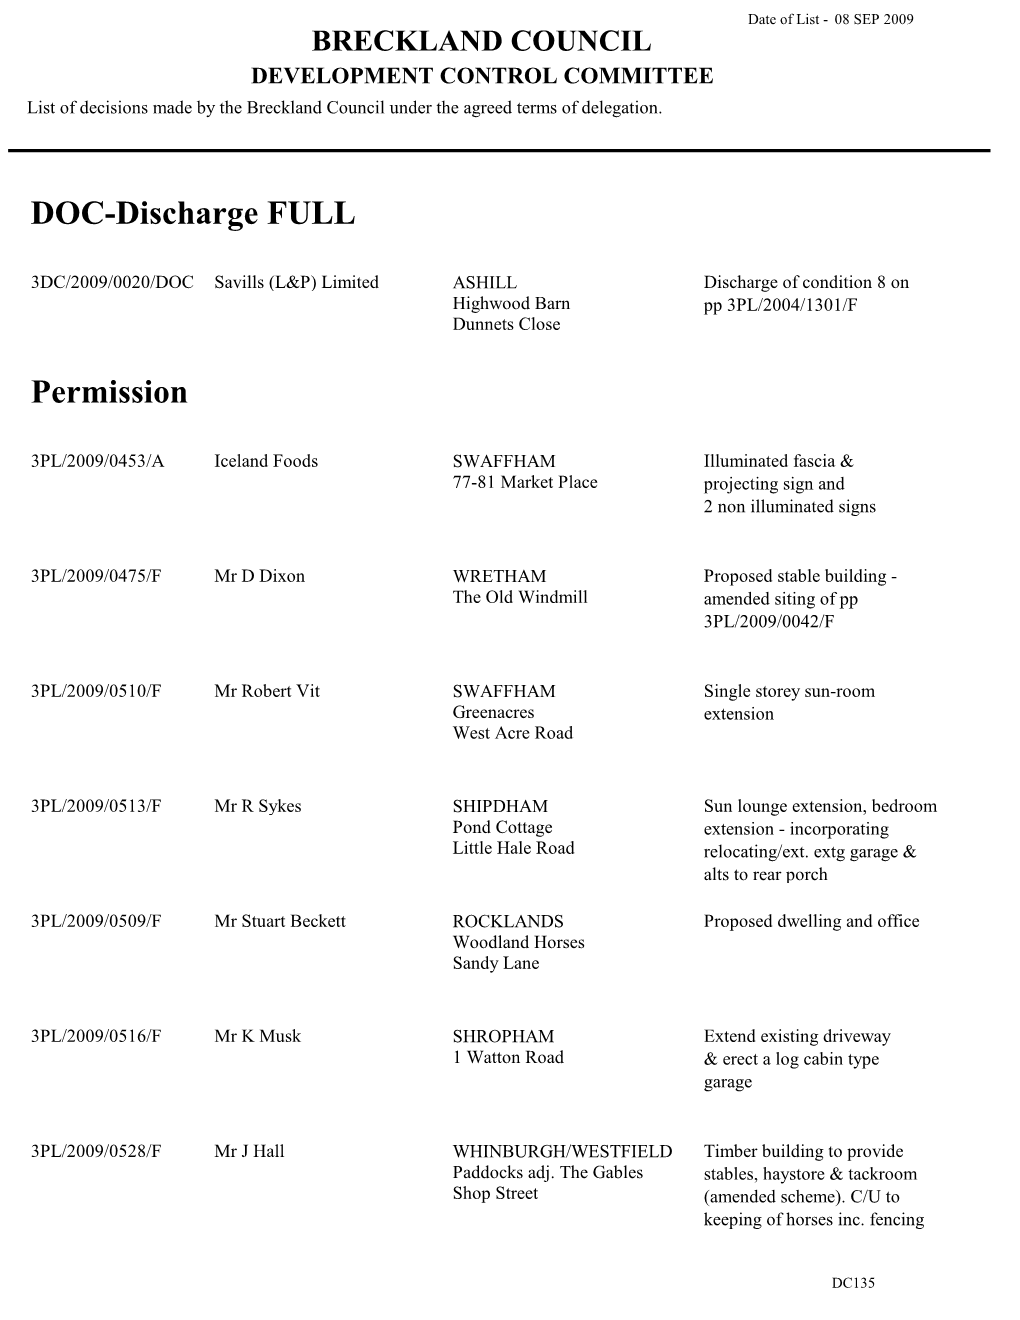 DOC-Discharge FULL Permission